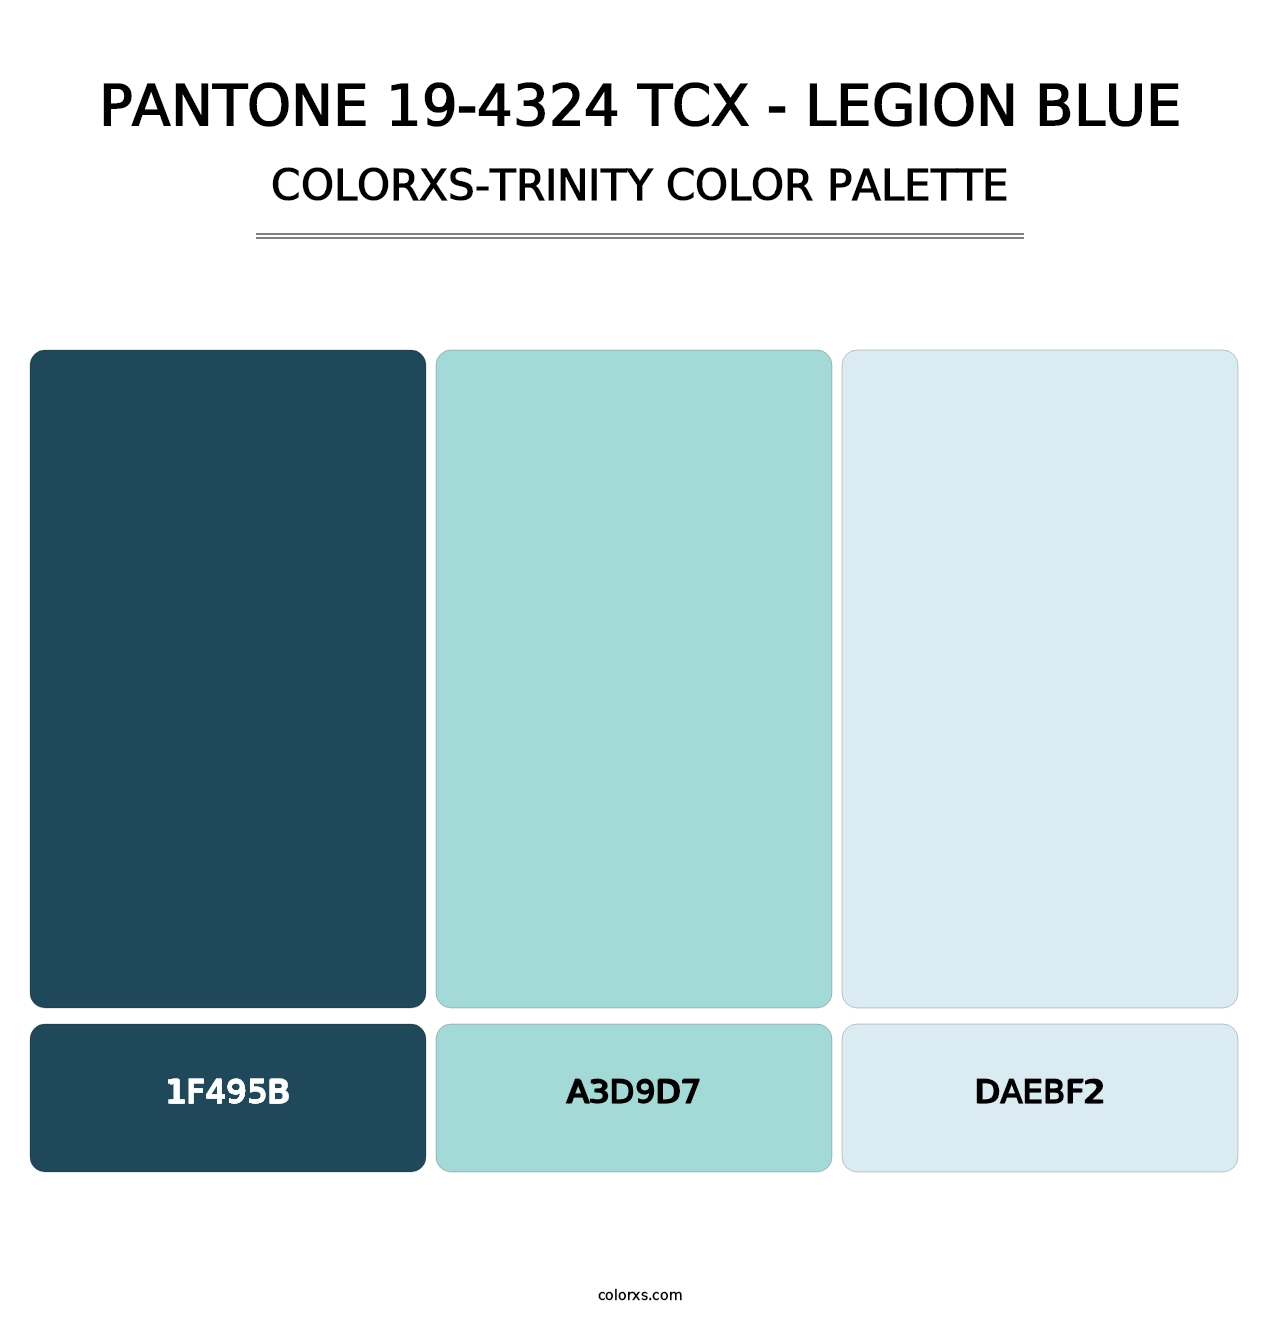 PANTONE 19-4324 TCX - Legion Blue - Colorxs Trinity Palette